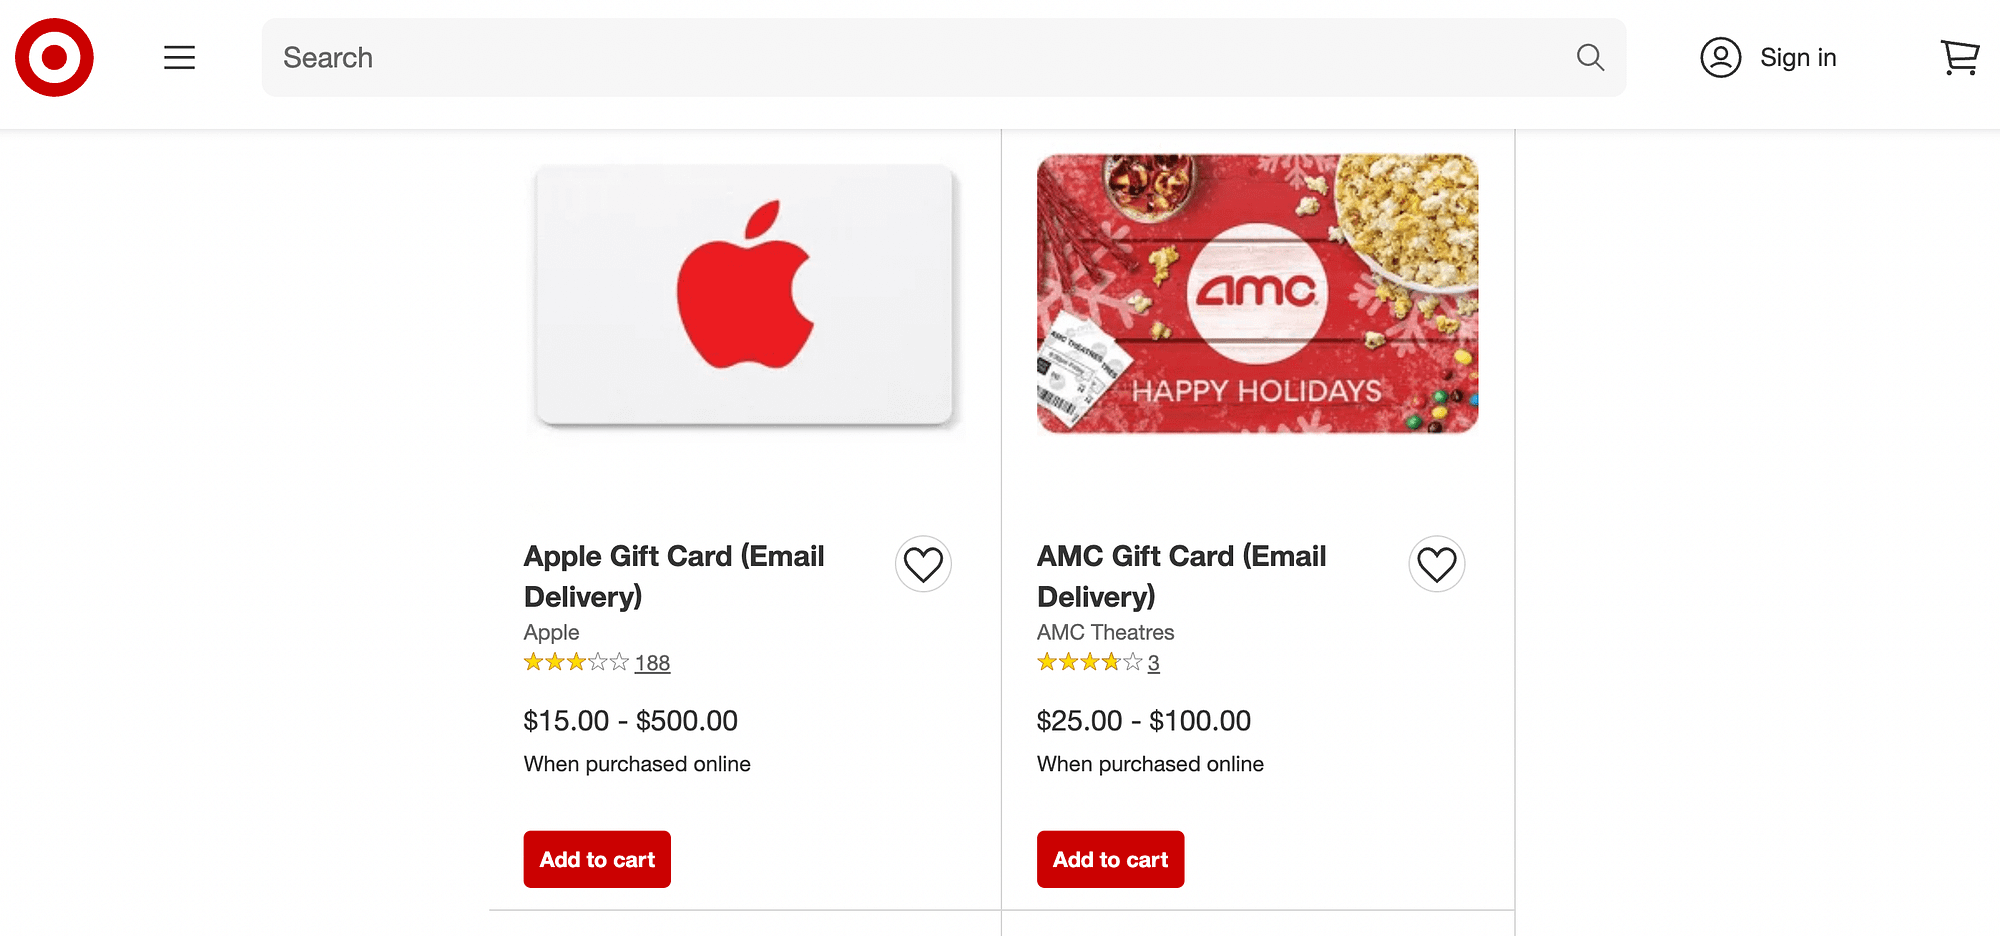 Seasonal gift card offerings at Target.com.